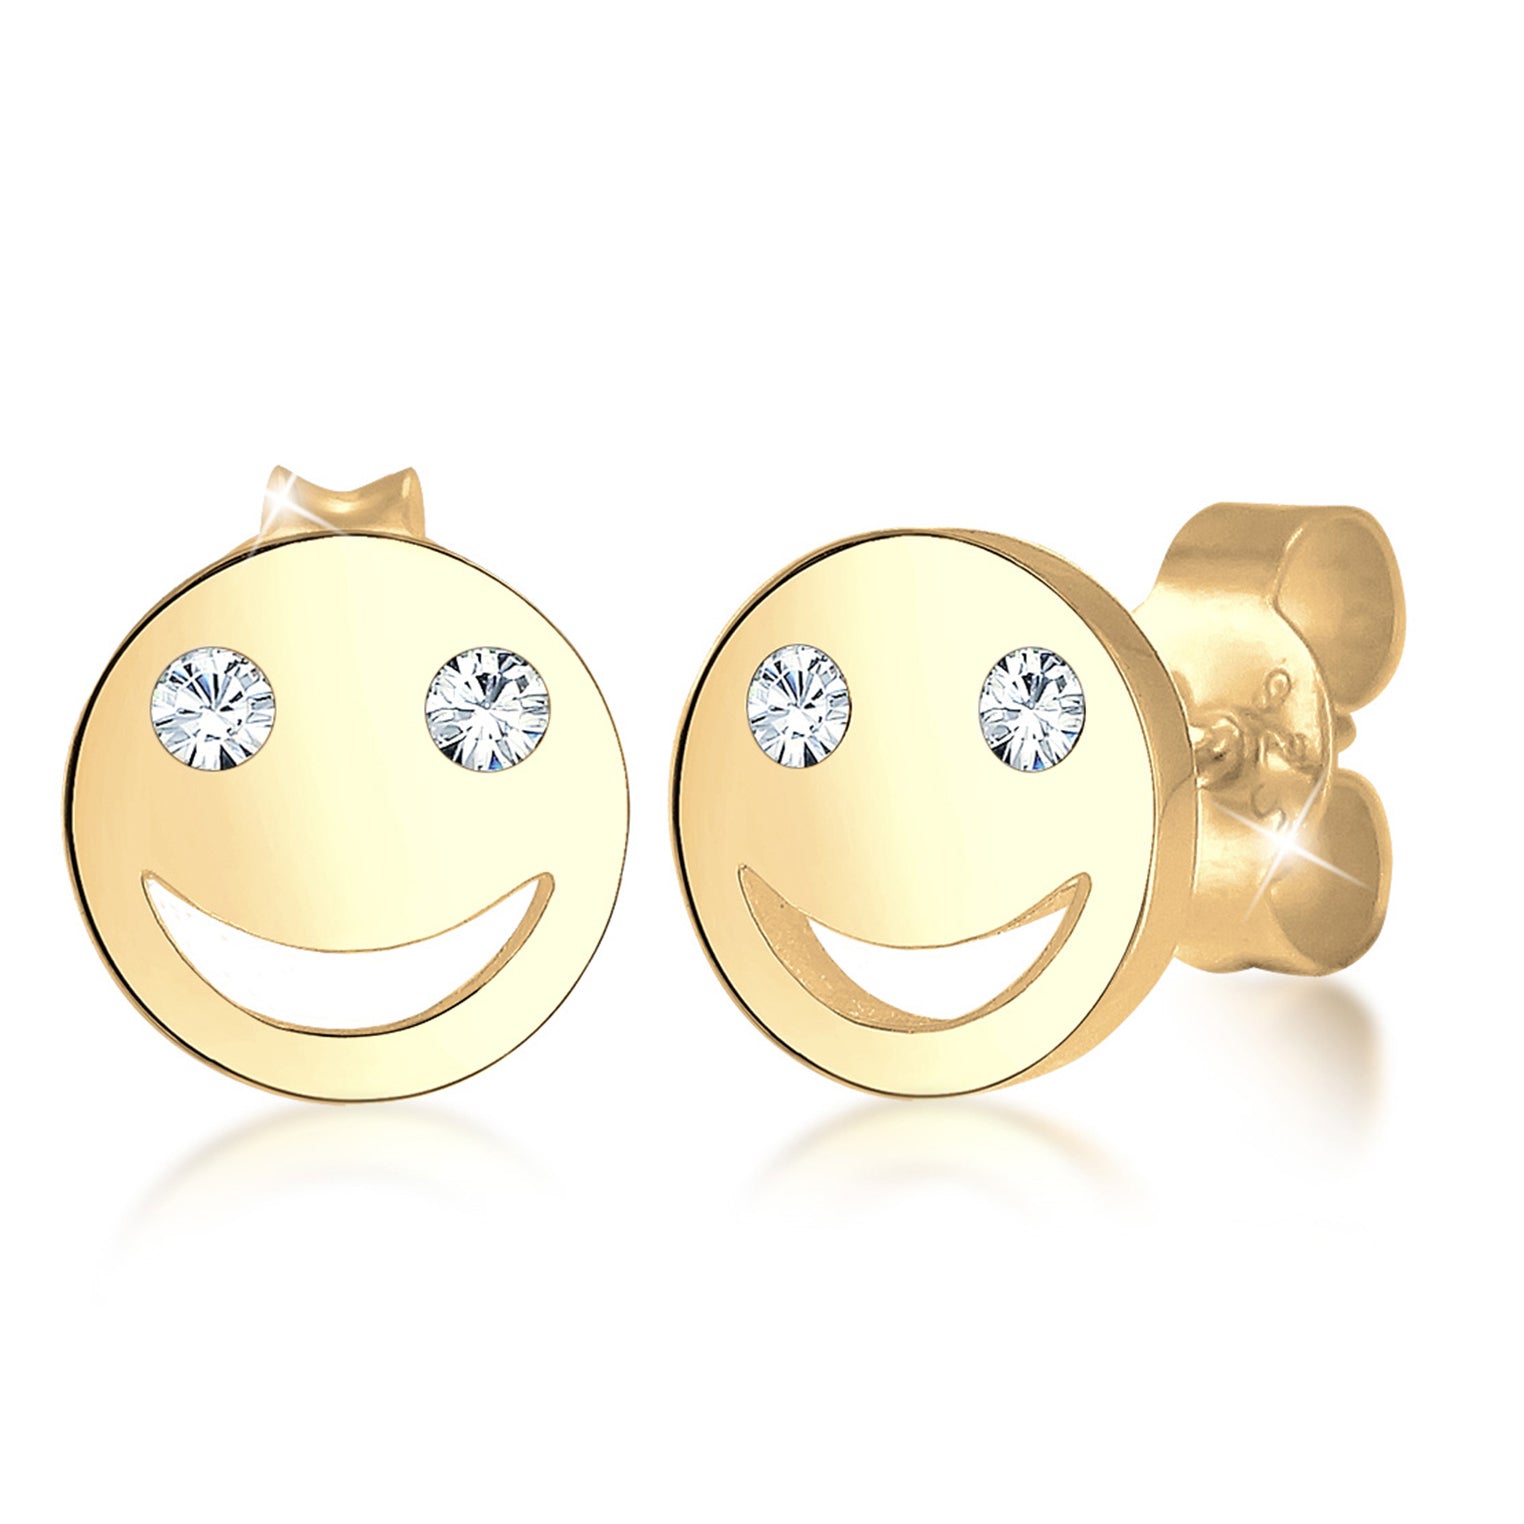 Gold - Elli | Ohrstecker mit Smiling Face | Kristall (Weiß) | 925 Sterling Silber vergoldet